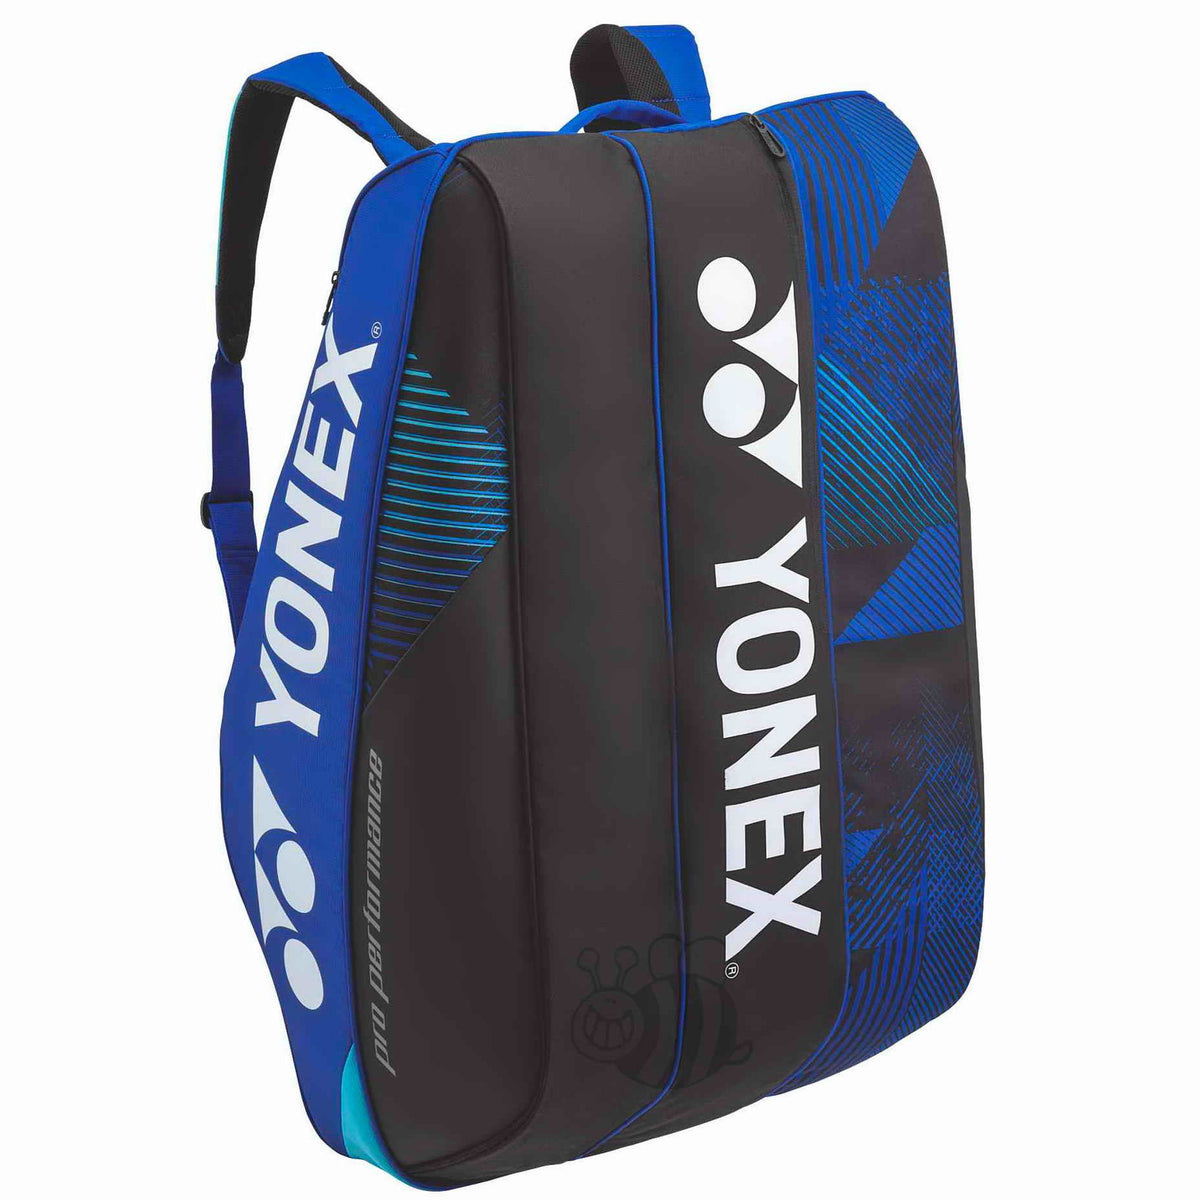 Yonex Racketbag 924212EX cobalt blau